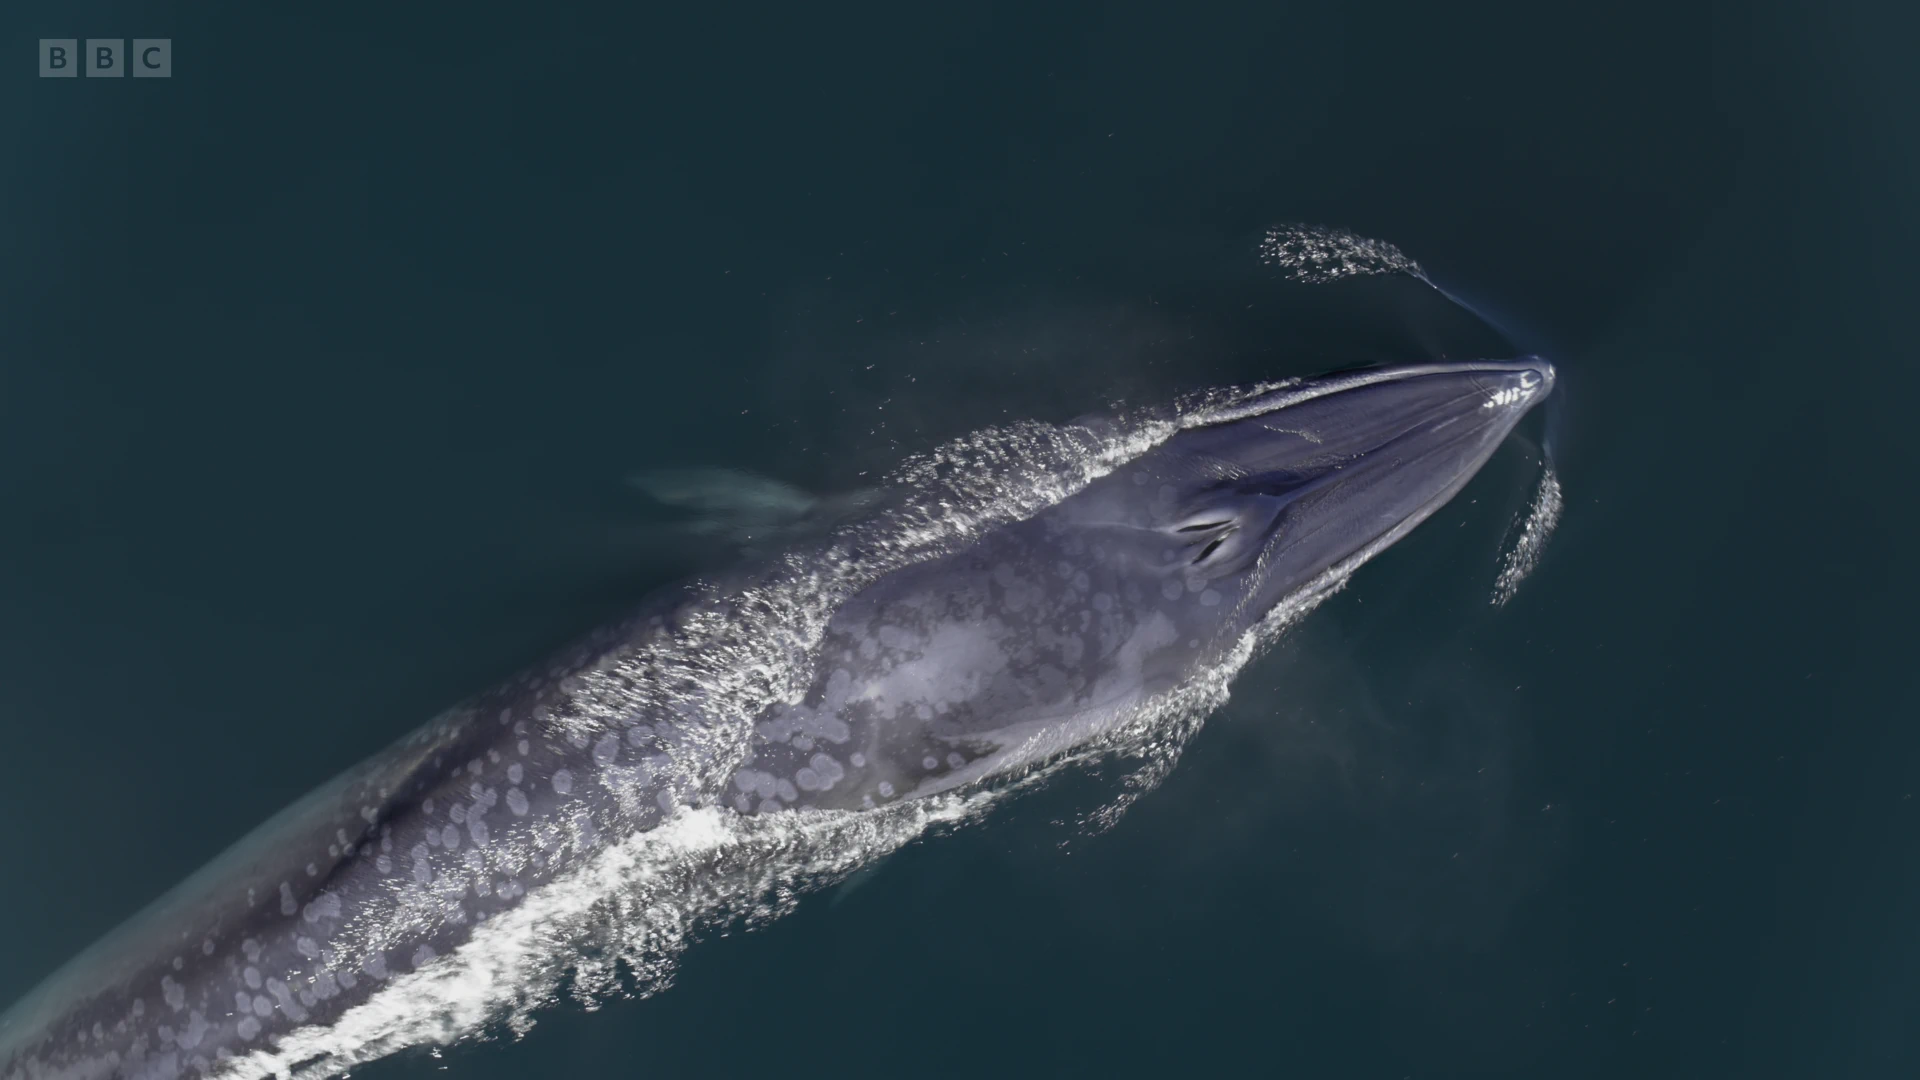 Eden's whale (Balaenoptera edeni edeni) as shown in A Perfect Planet - Oceans